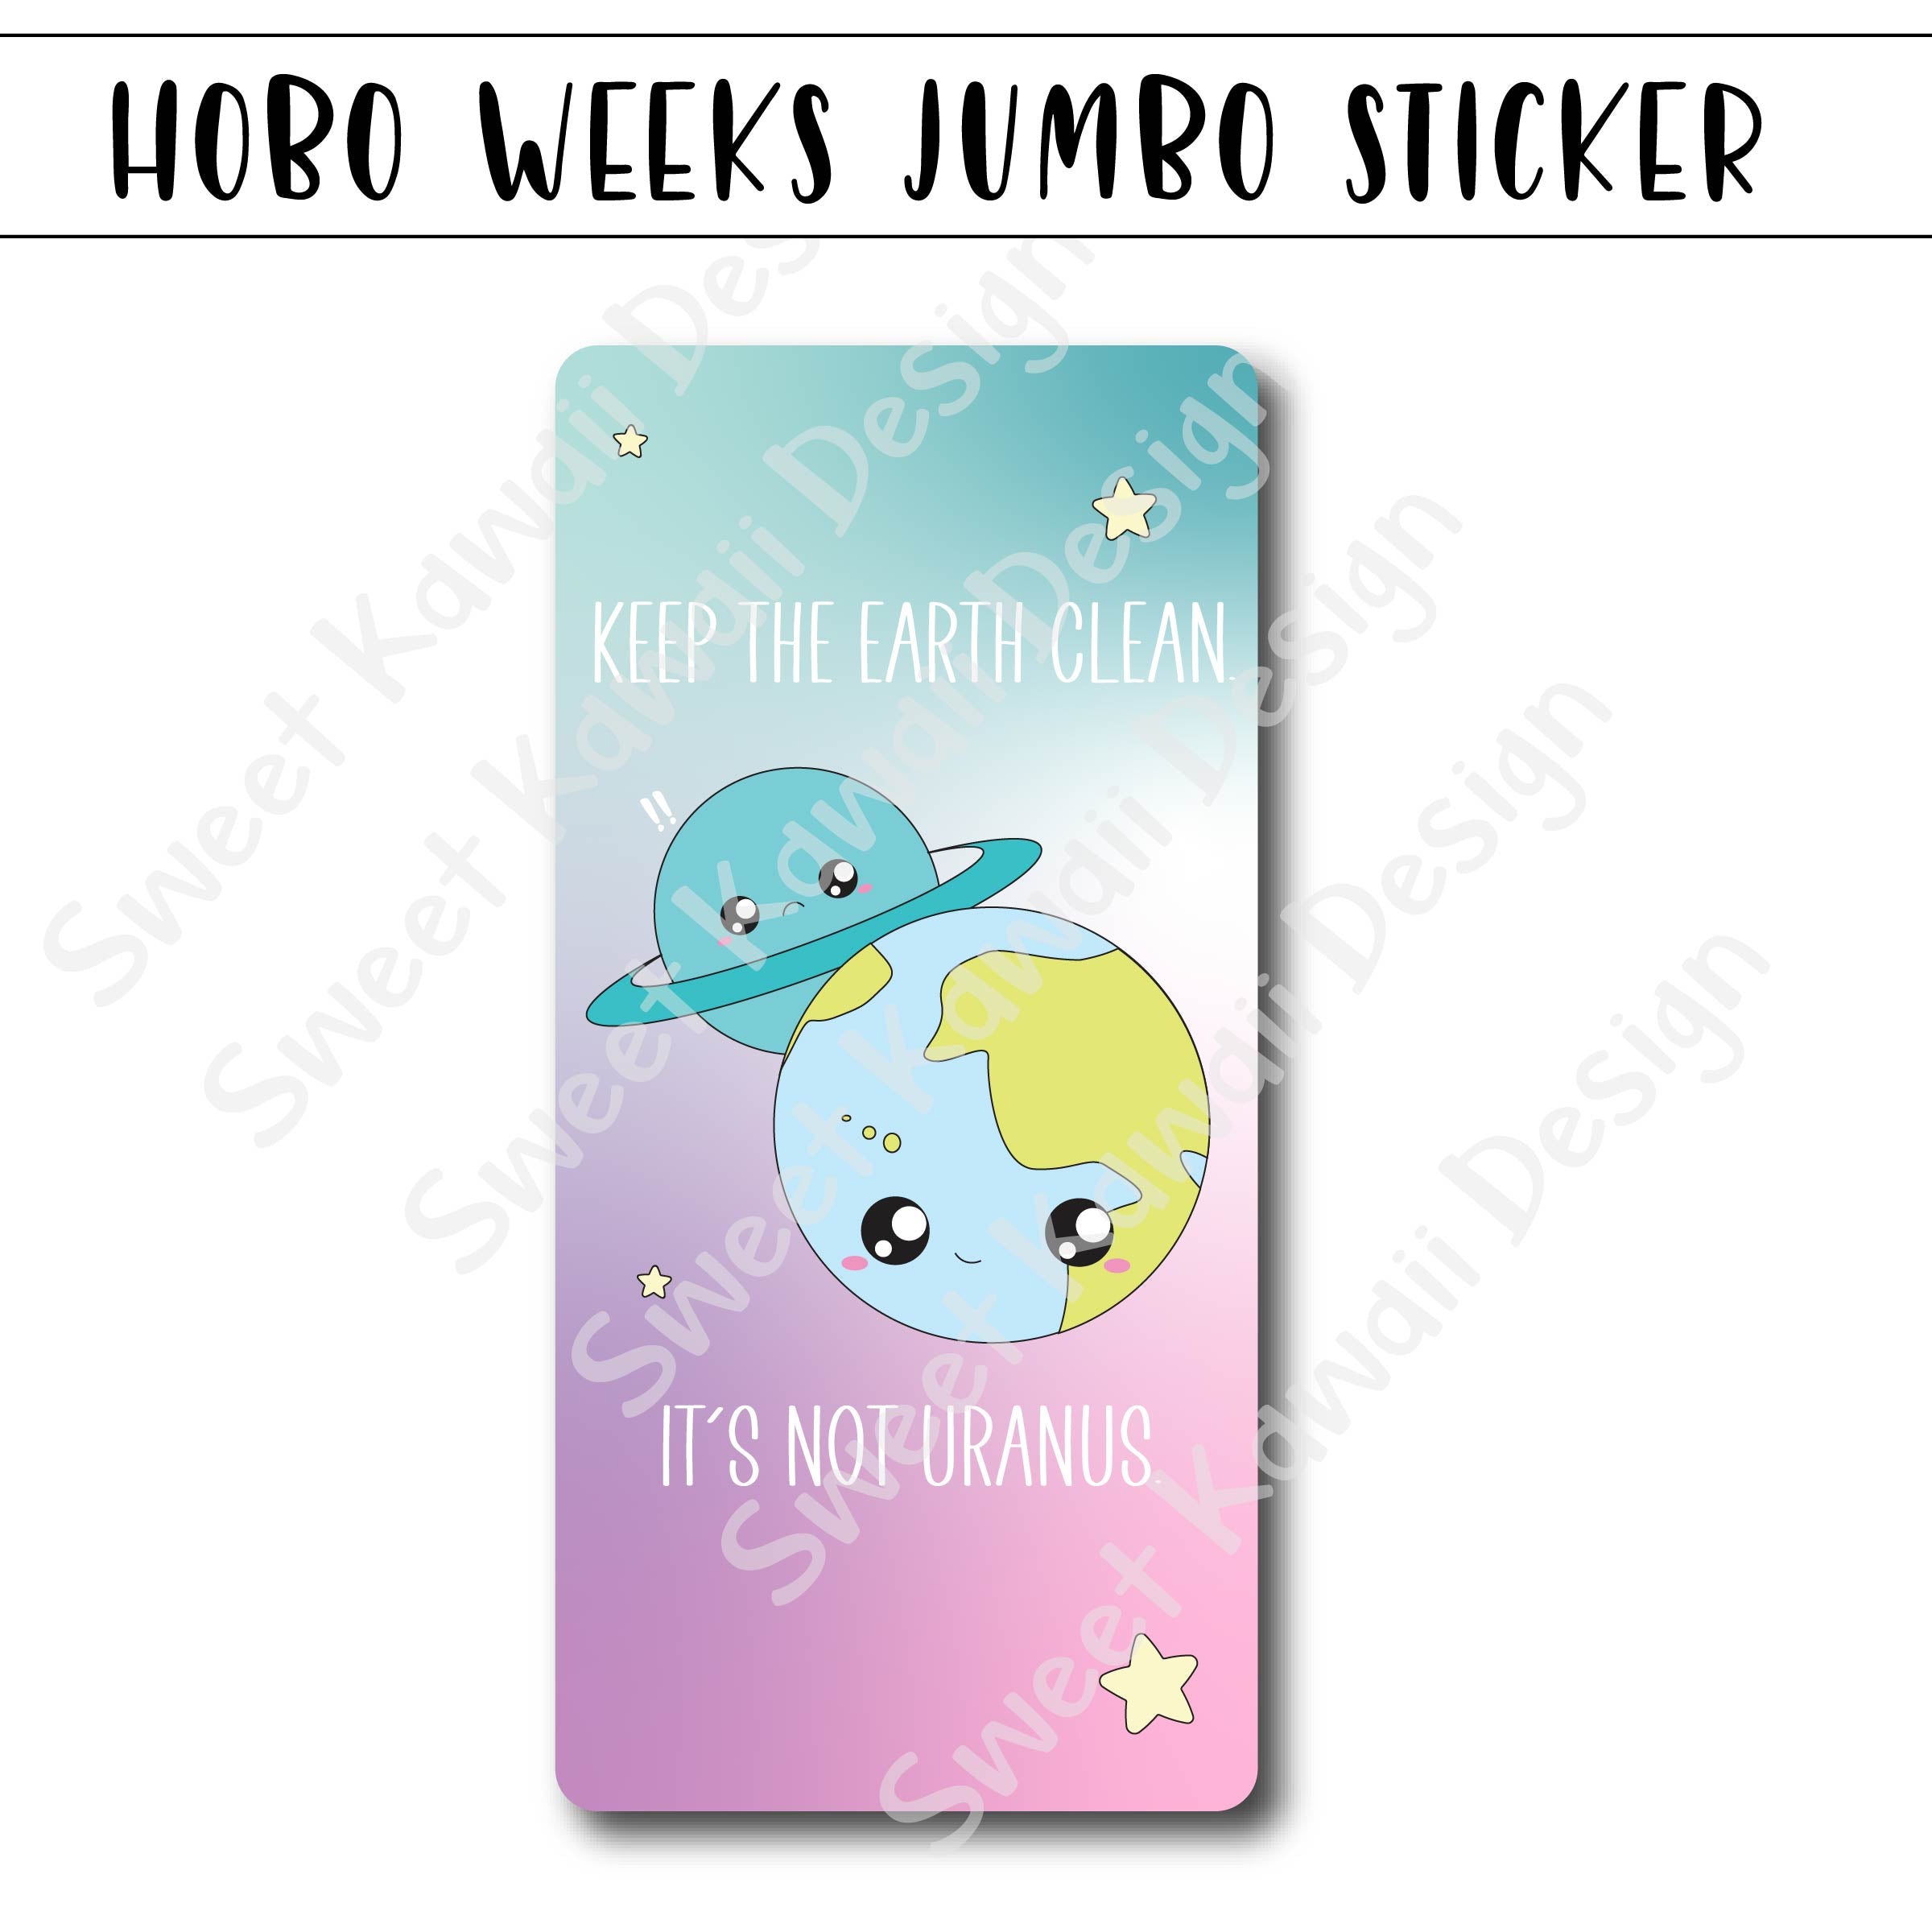 Kawaii Jumbo Sticker - Uranus (Keep the earth clean) - Size Options Available